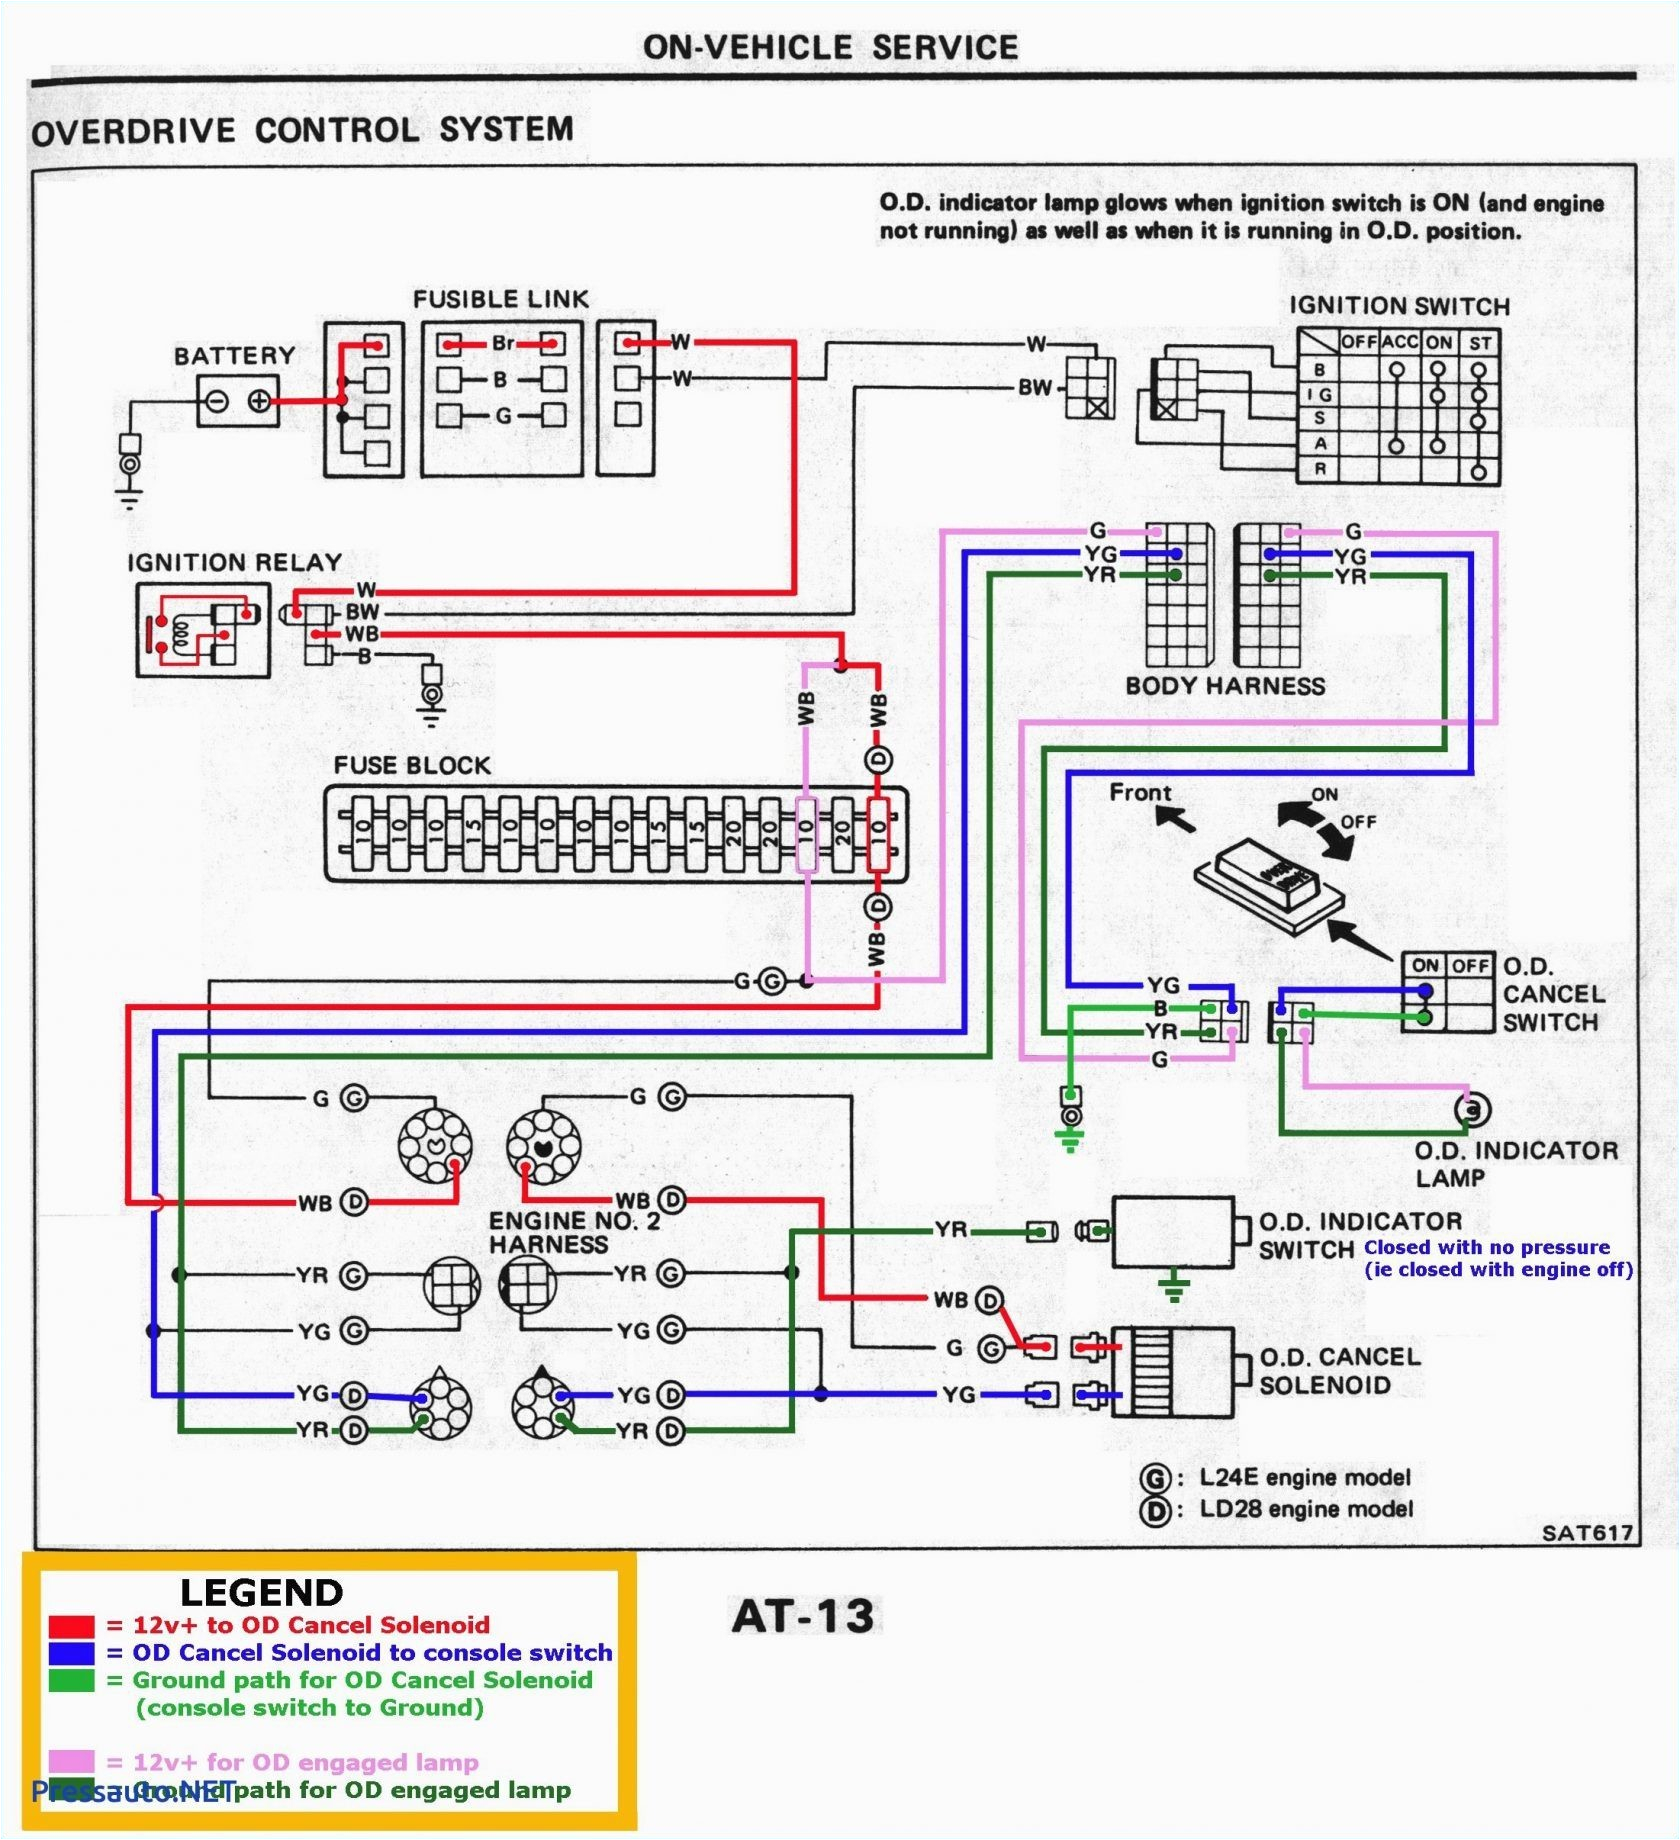 bullhorn wiring diagram data schematic diagram bullhorn wiring diagram